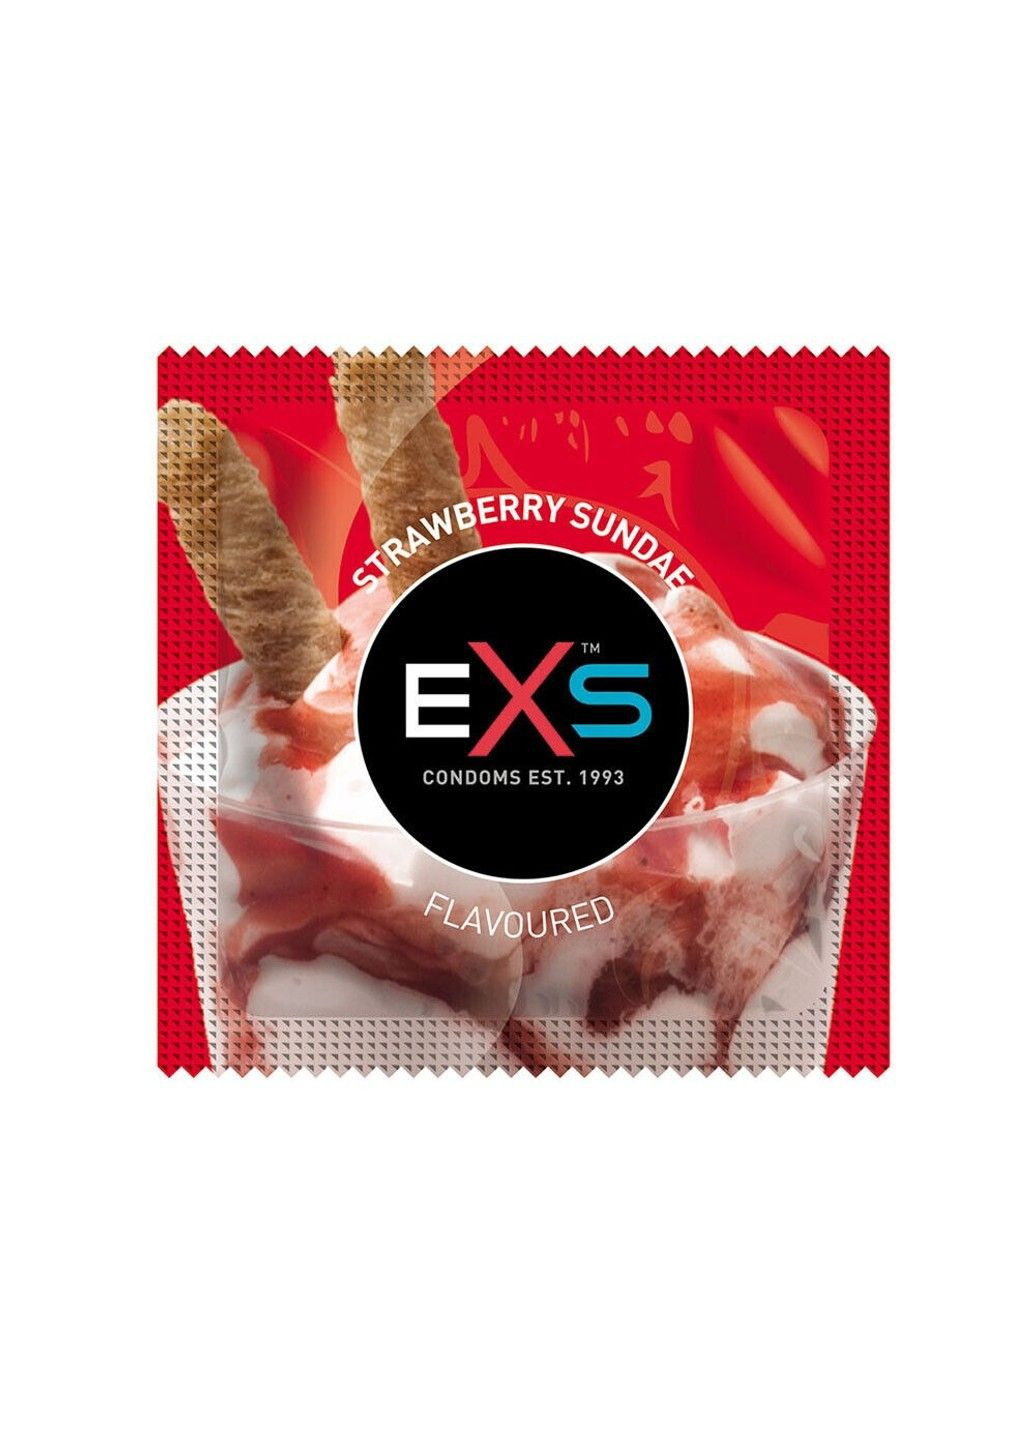 Презерватив со вкусом клубники Flavoured strawberry sundae Веган за 5 шт EXS (282849761)